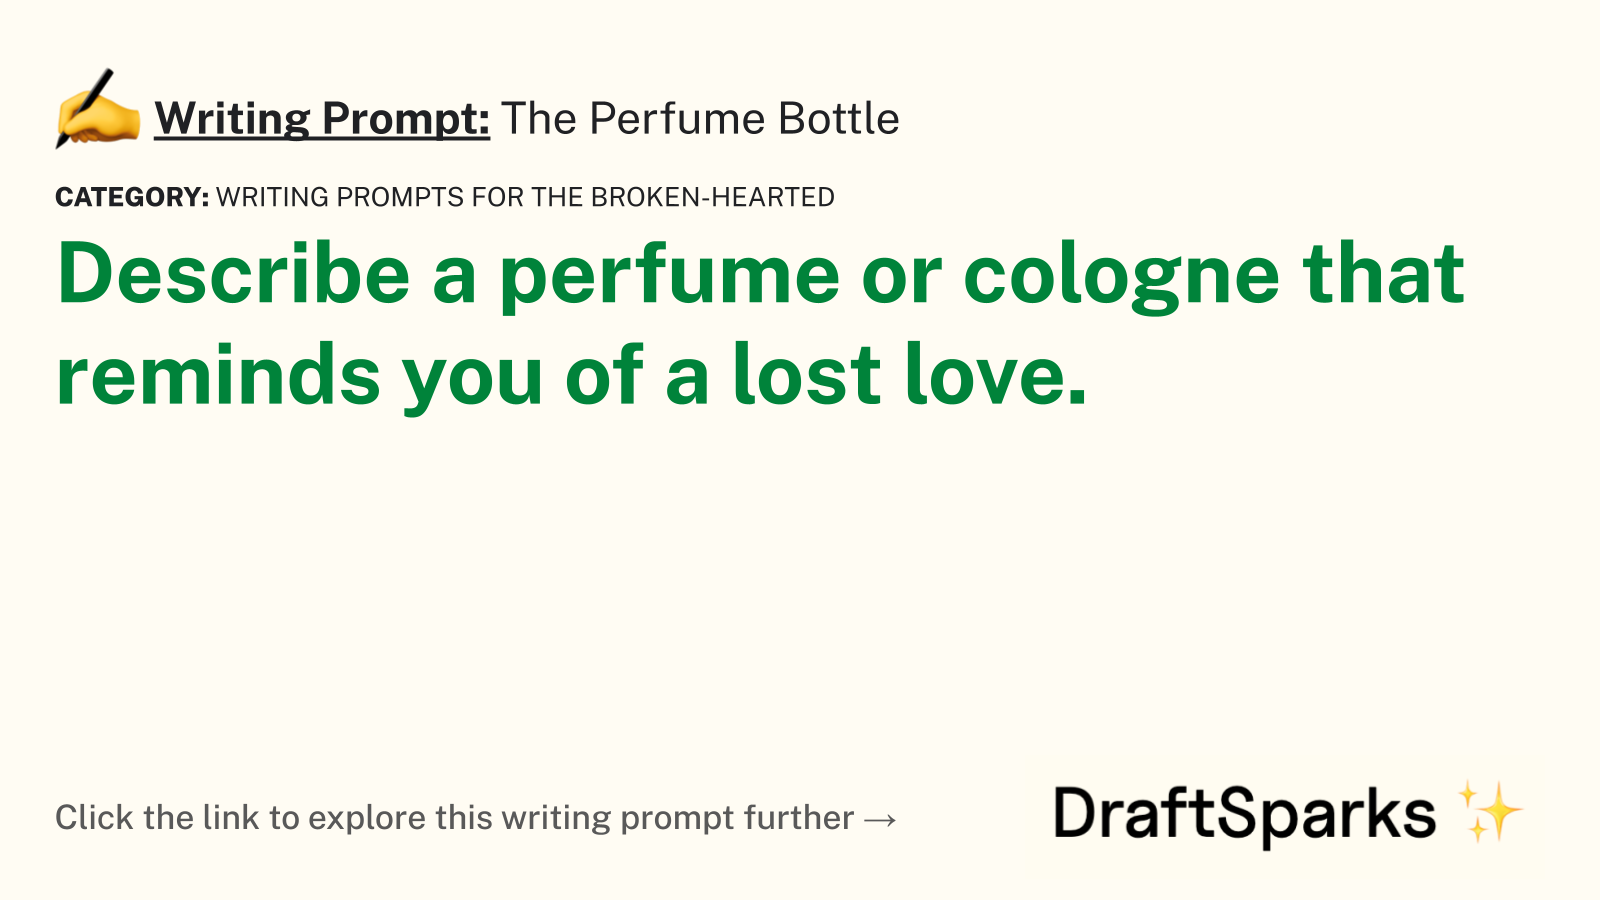 The Perfume Bottle